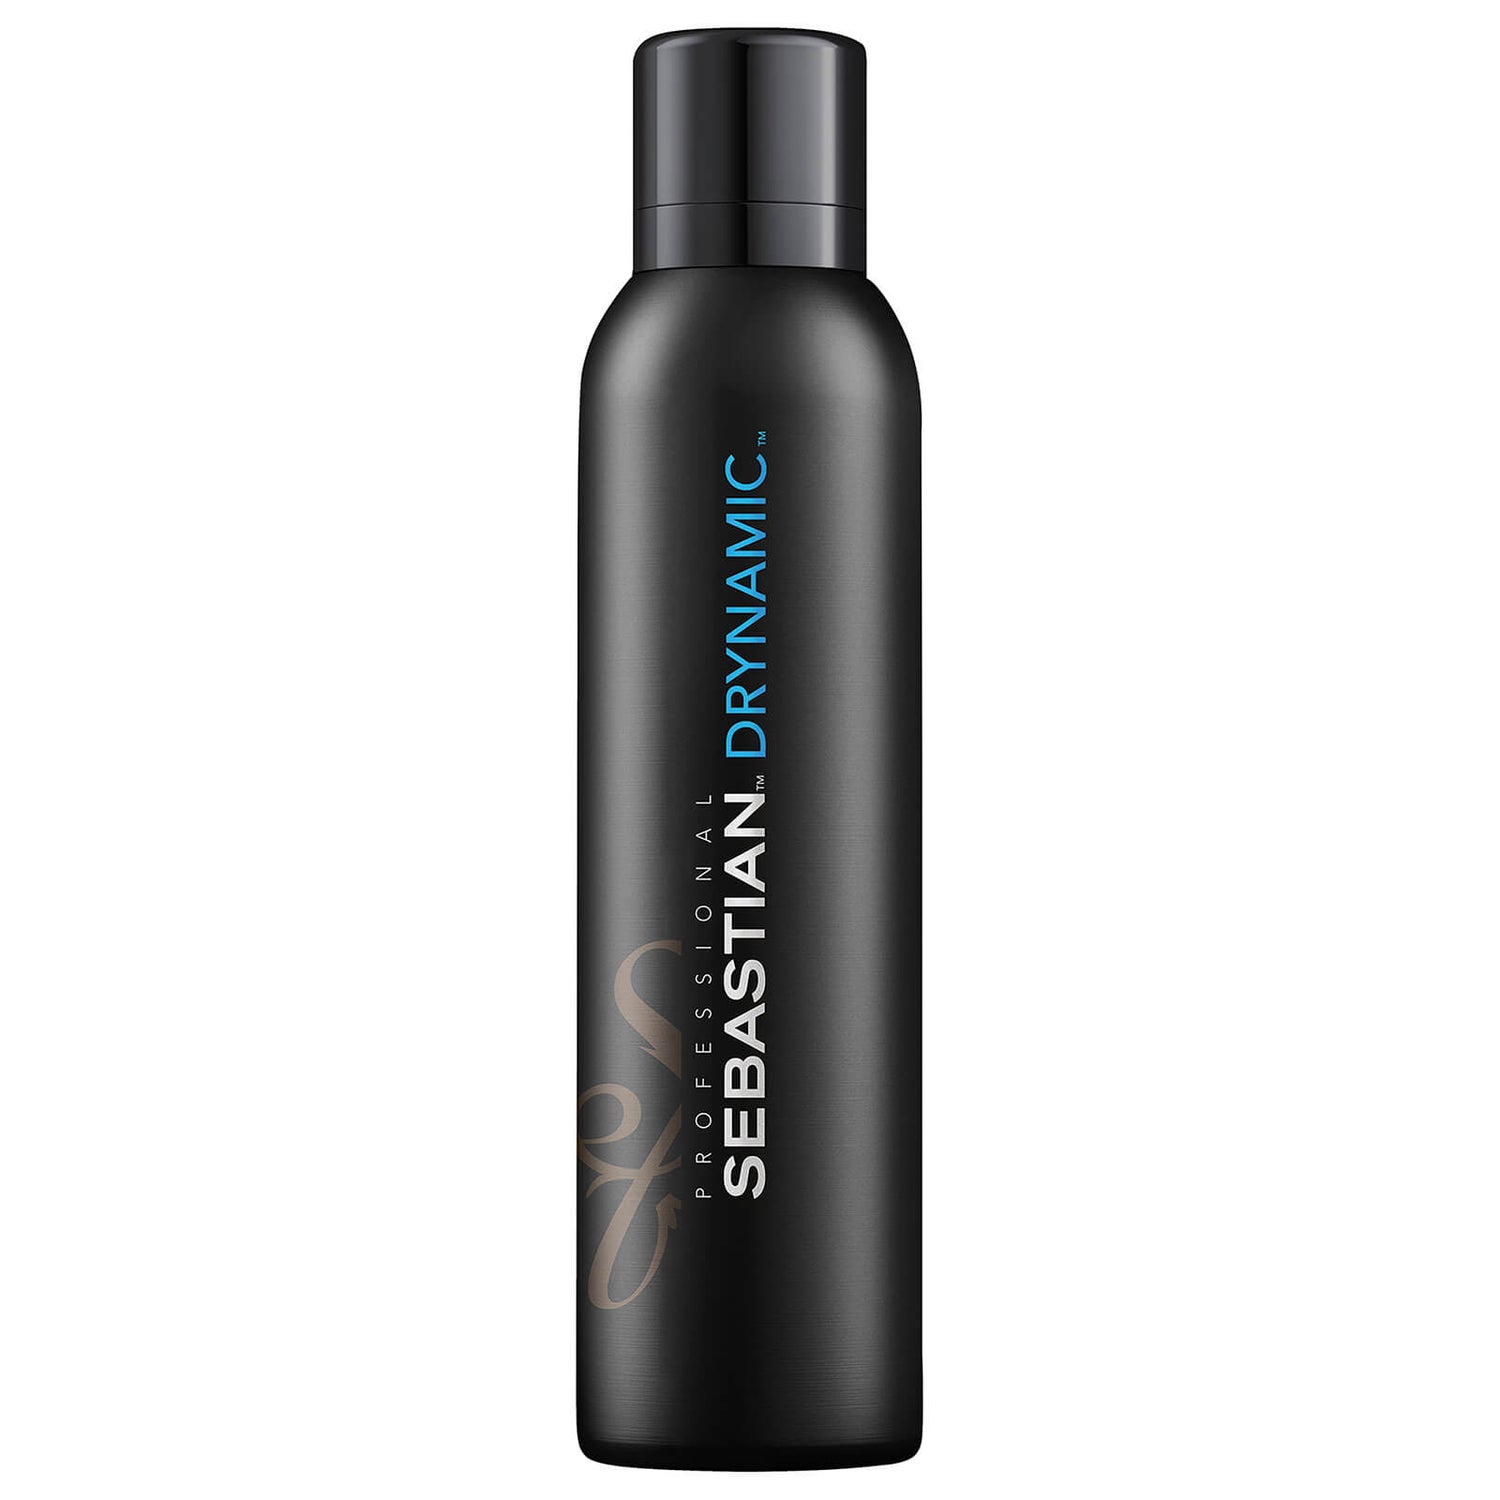 Shampooing Sec Drynamic+ Sebastian Professional 212 ml